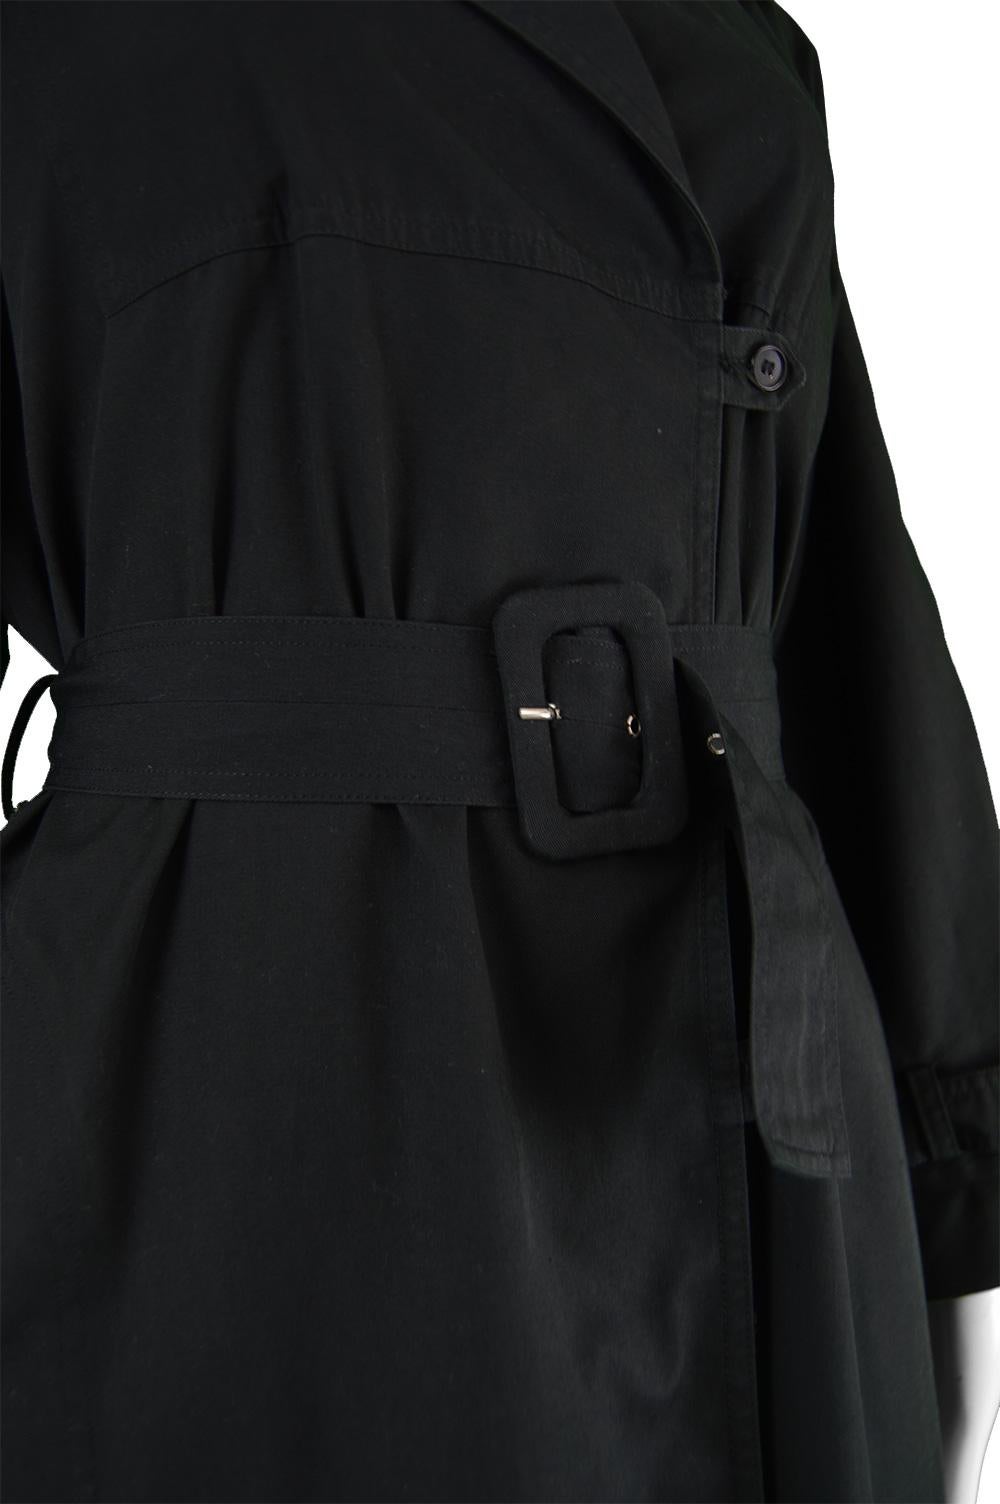 Guy Laroche Vintage Minimalist Women's Black Cotton Trench Coat, 1980s For Sale 3